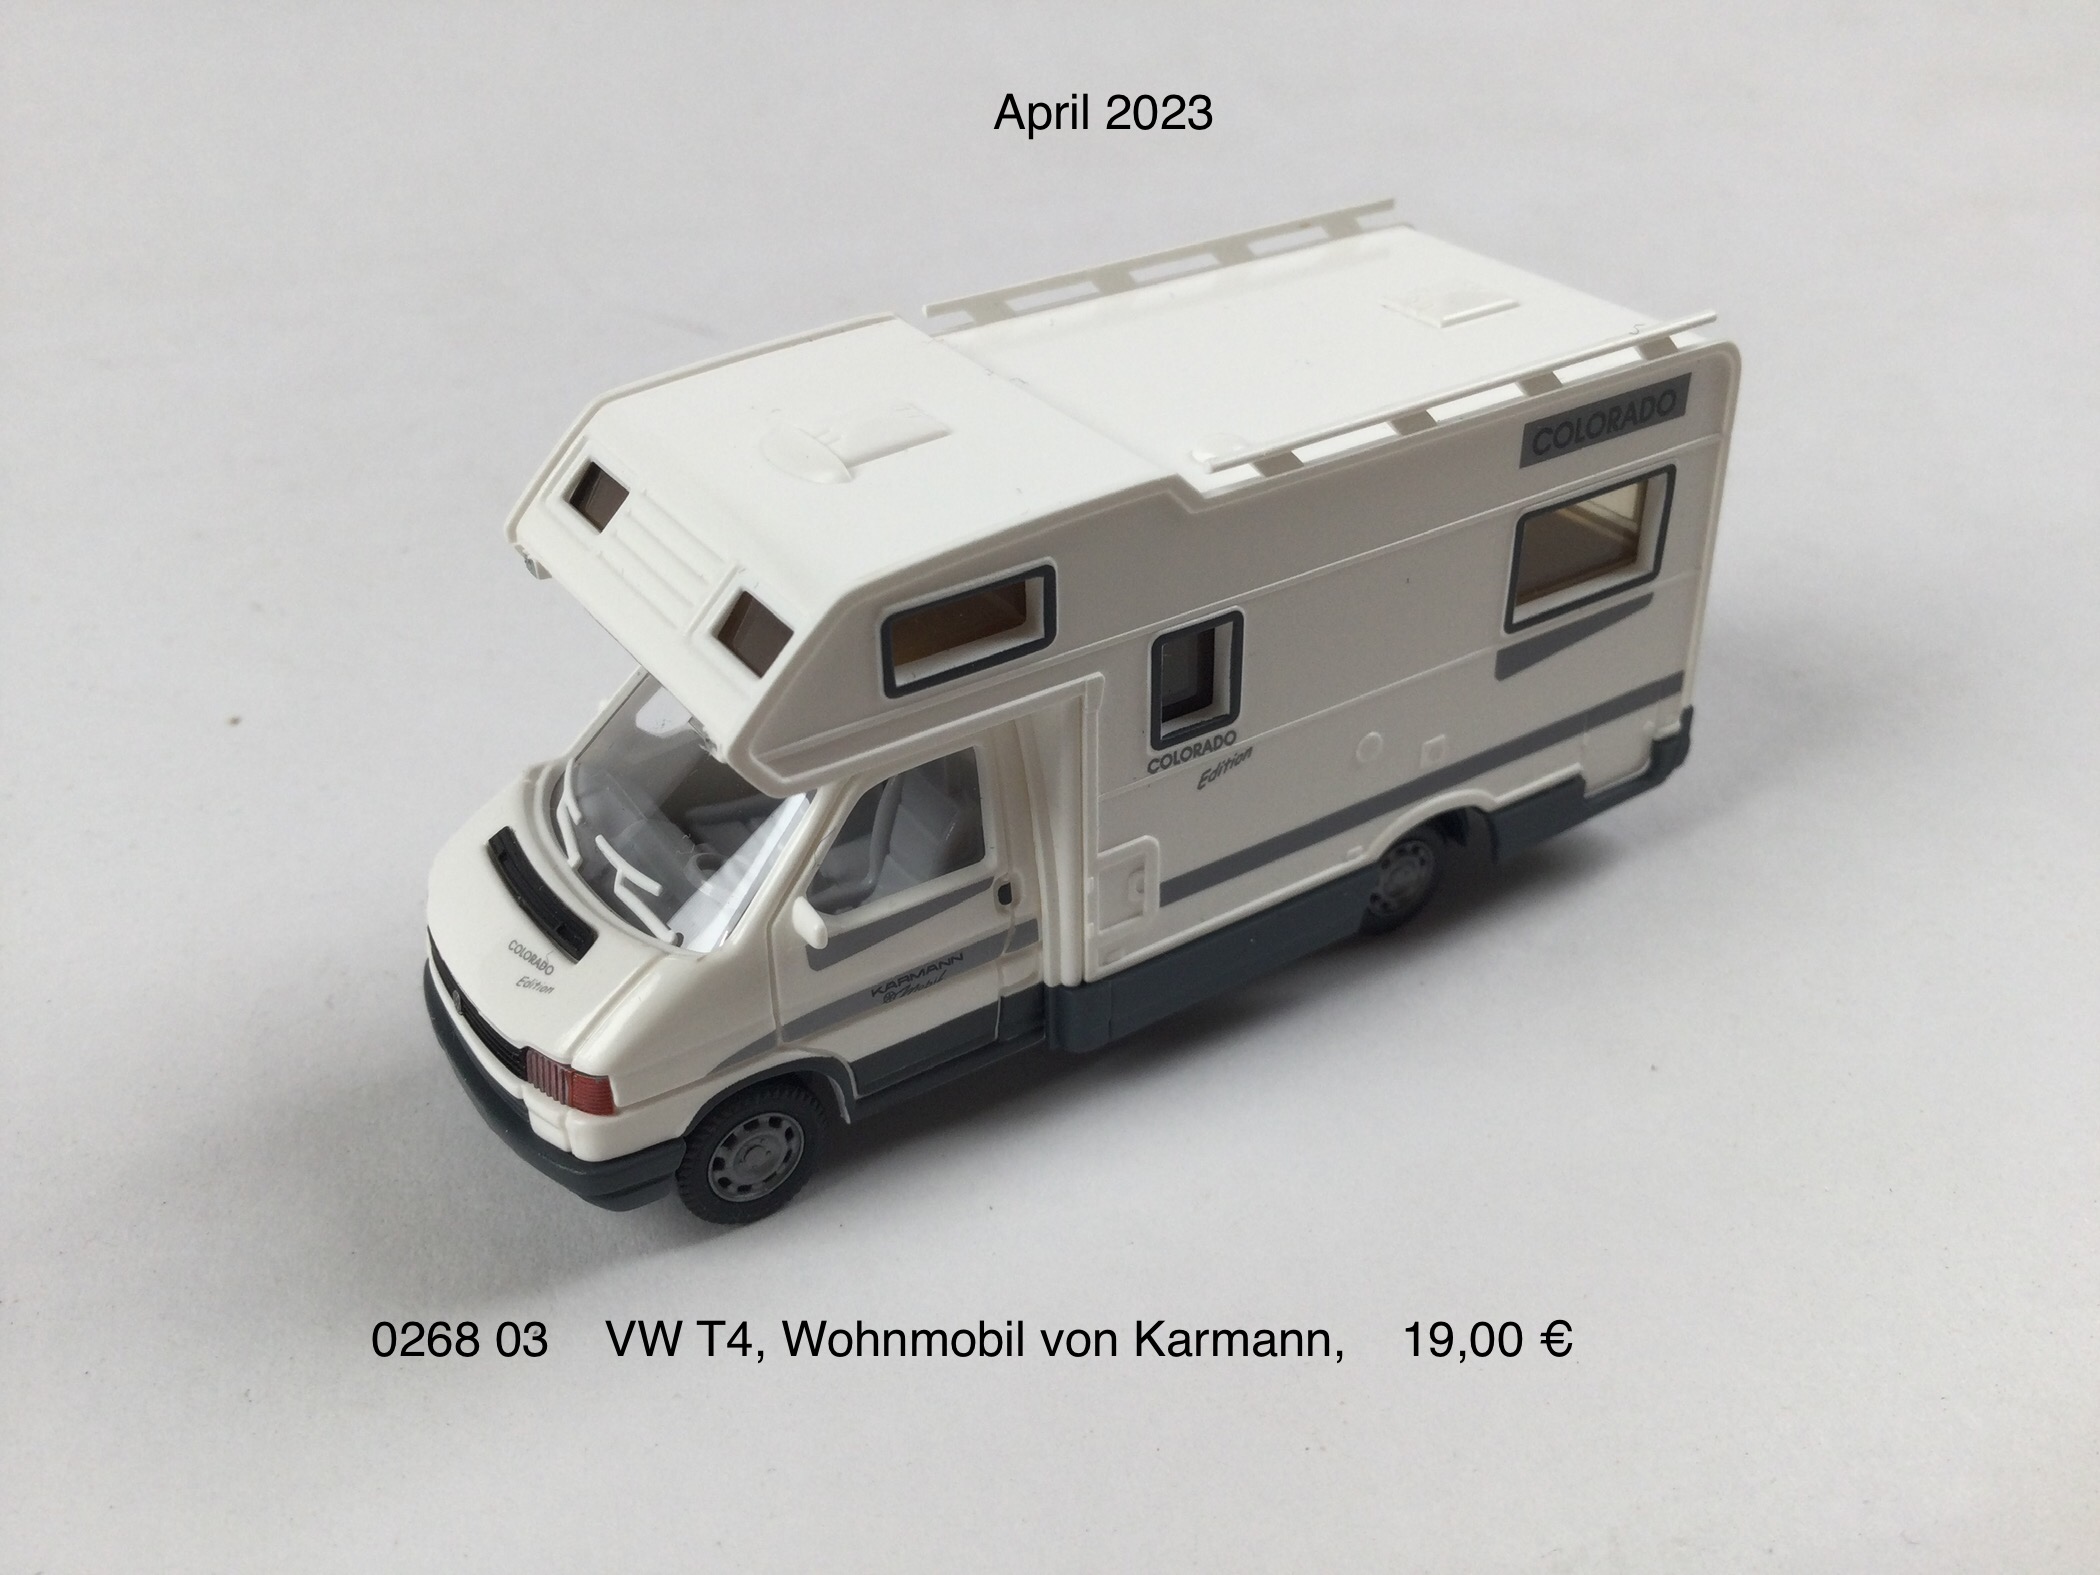 VW T4 Wohnmobil von Karmann "Colorado"